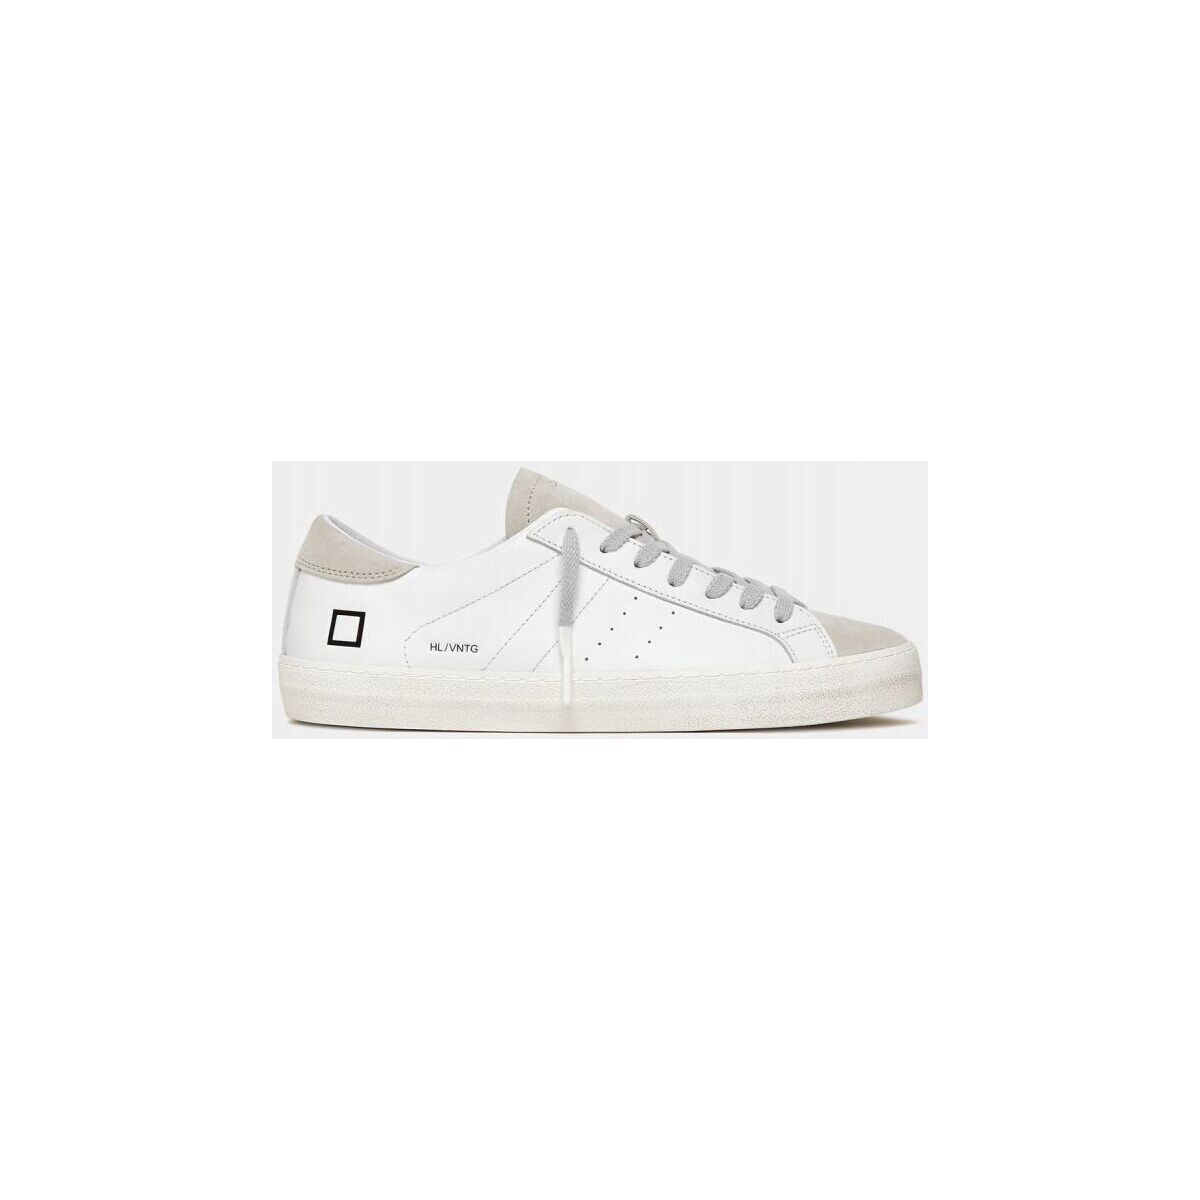 Schuhe Herren Sneaker Date M401-HL-VC-WH - HILL LOW-WHITE Weiss